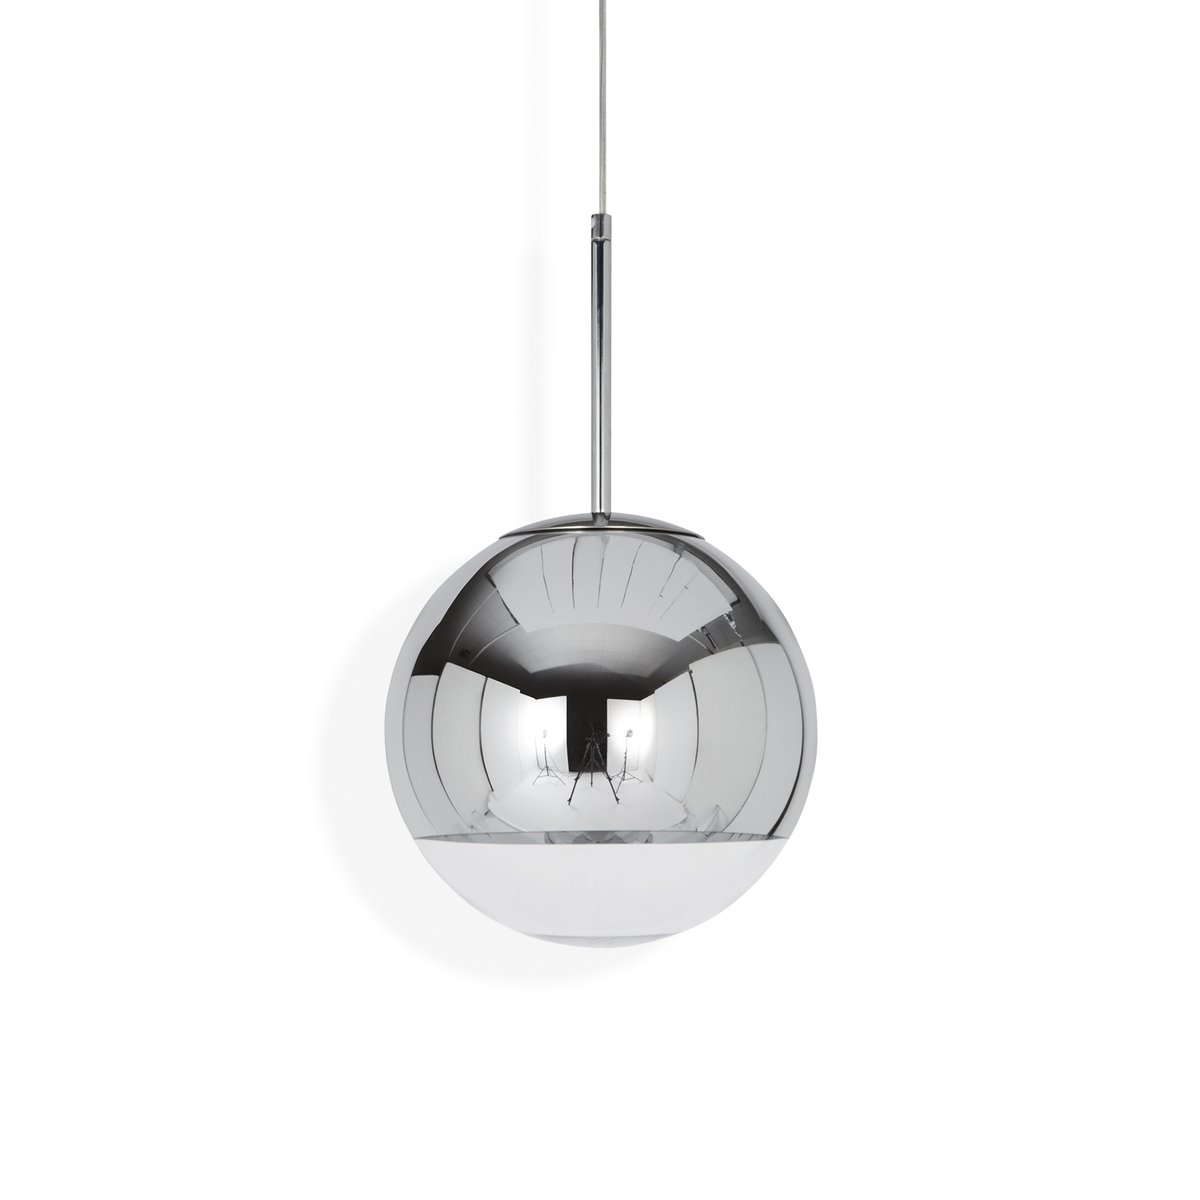 Tom Dixon Mirror Ball hanglamp LED Ø25 cm Chrome